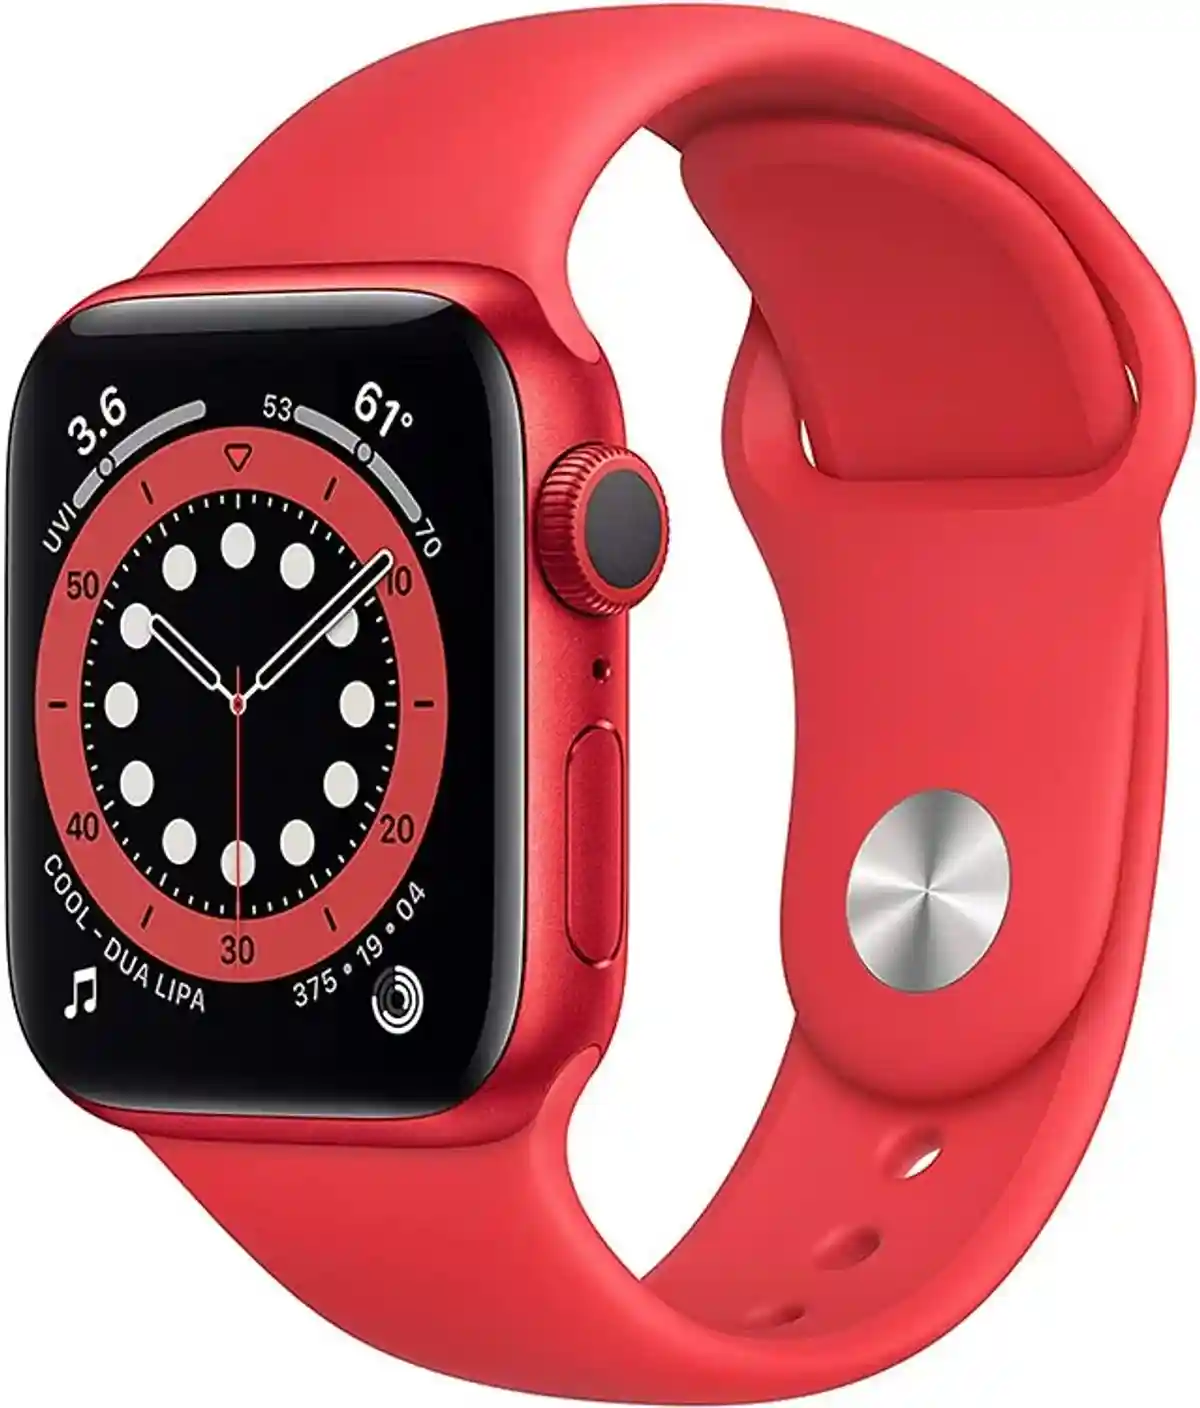 Apple Watch 6. Фото: apple.com